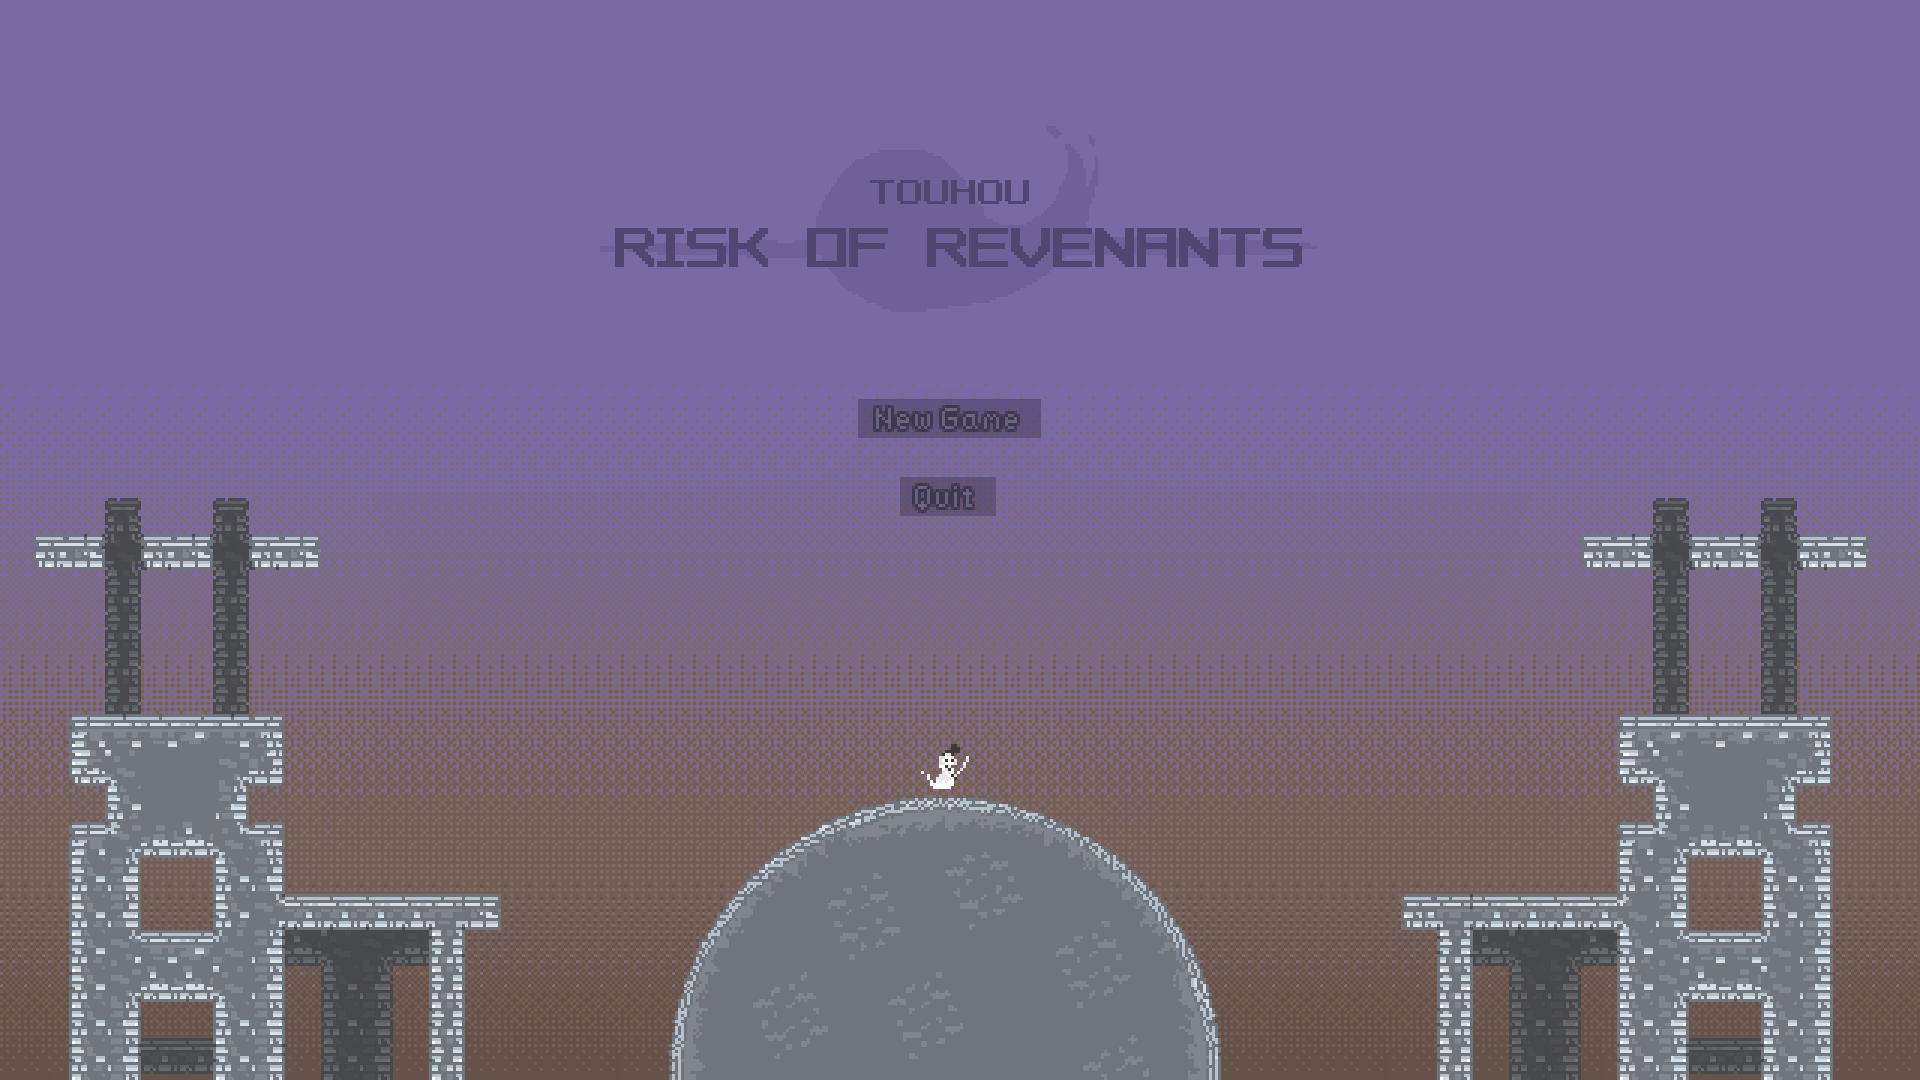 Touhou: Risk of Revenants